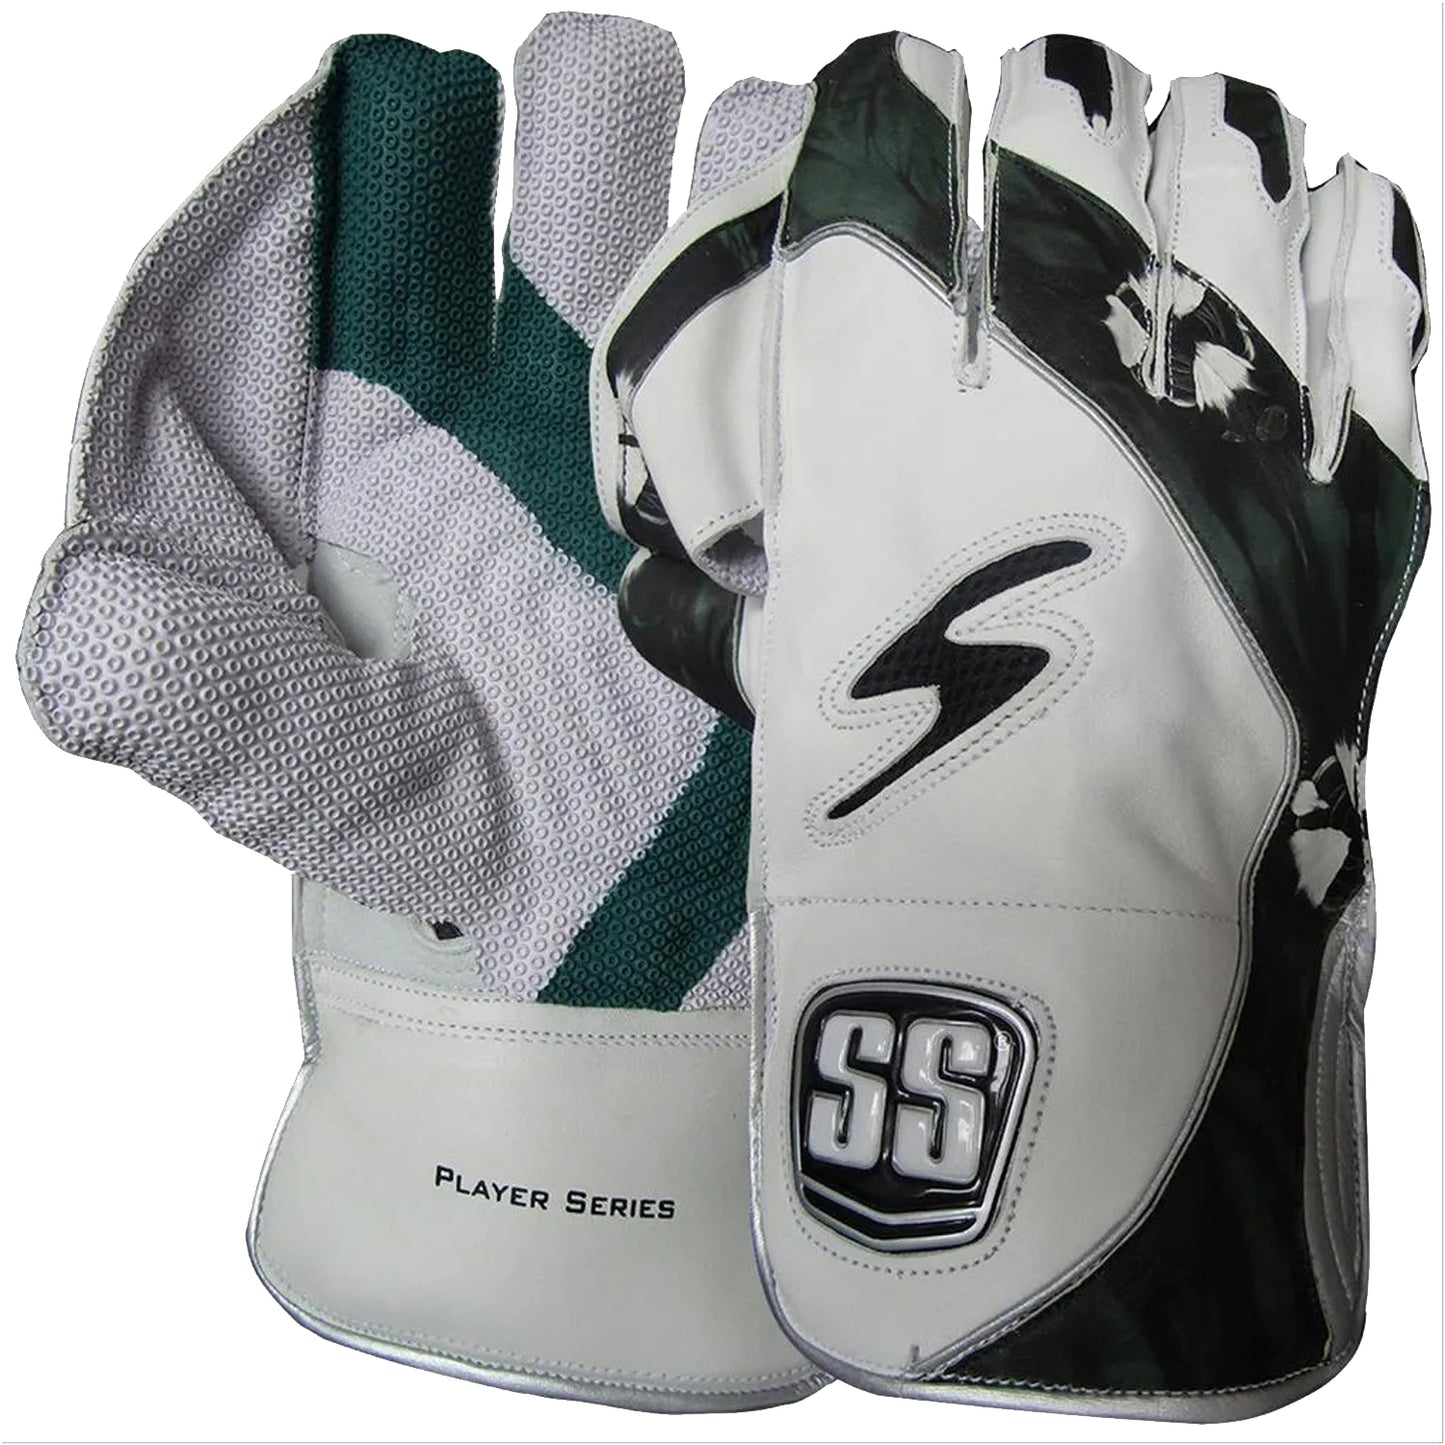 SS Player Series Wicket Keeping Gloves White/Black - Best Price online Prokicksports.com